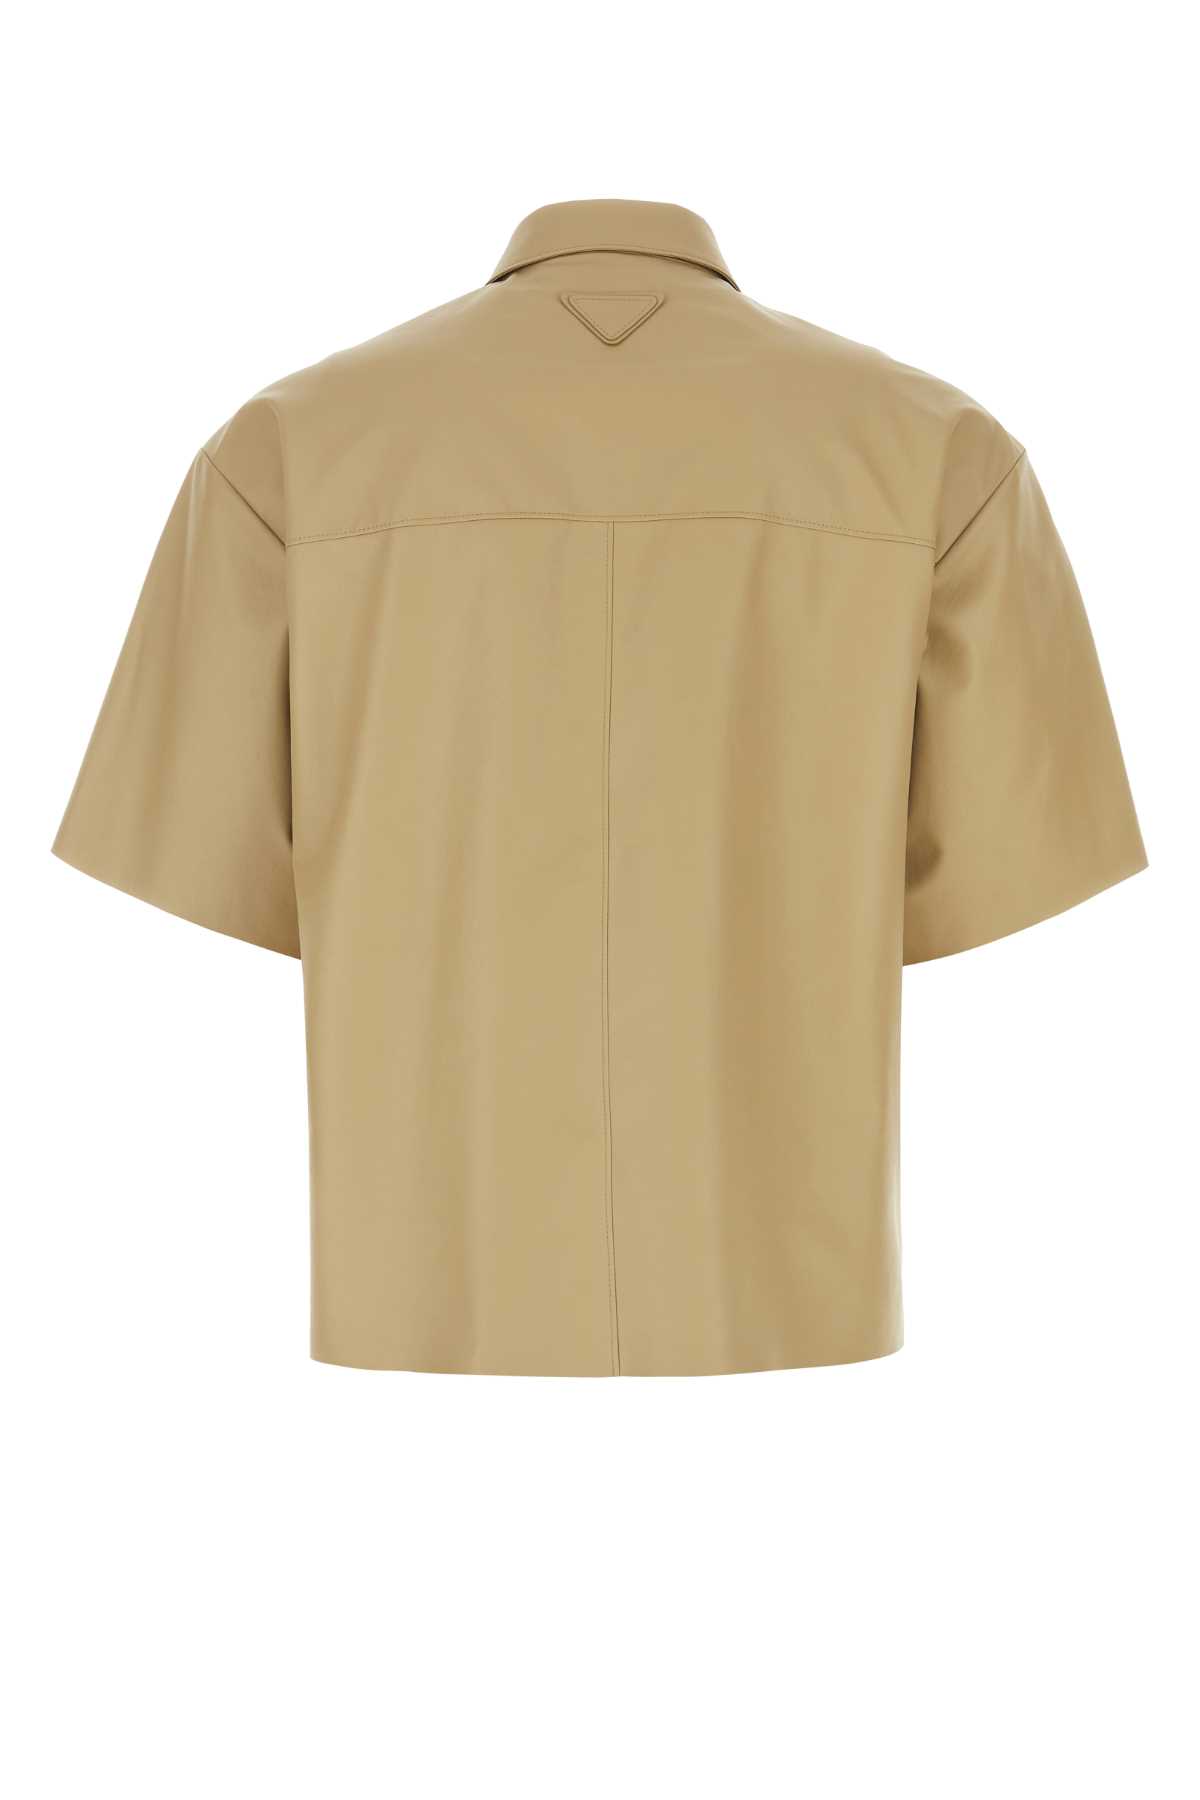 Prada Beige Leather Shirt In Kaki